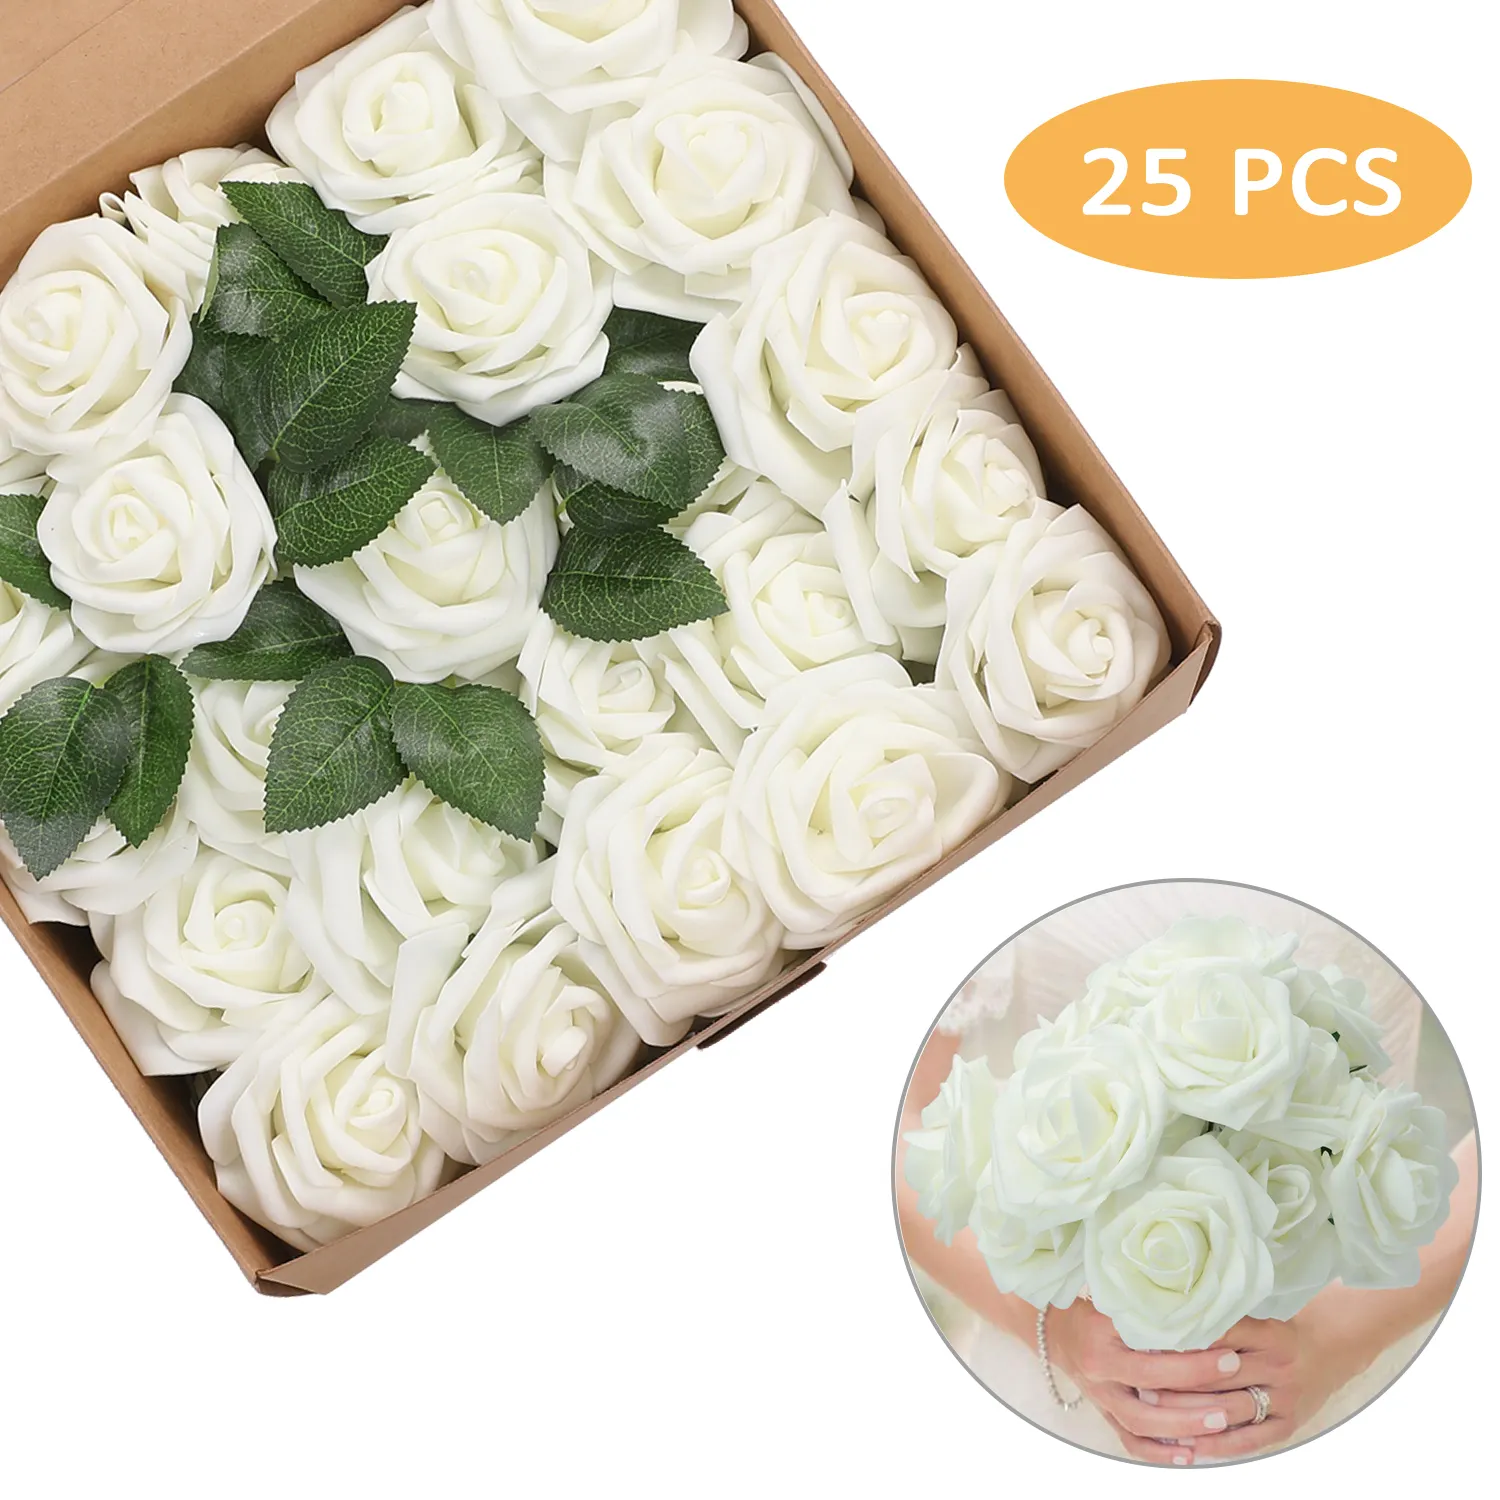 Wholesale 8センチメートルArtificial PE Foam Flowers Roses High Quality Bulk Flowers Artificial For Decoration Wedding